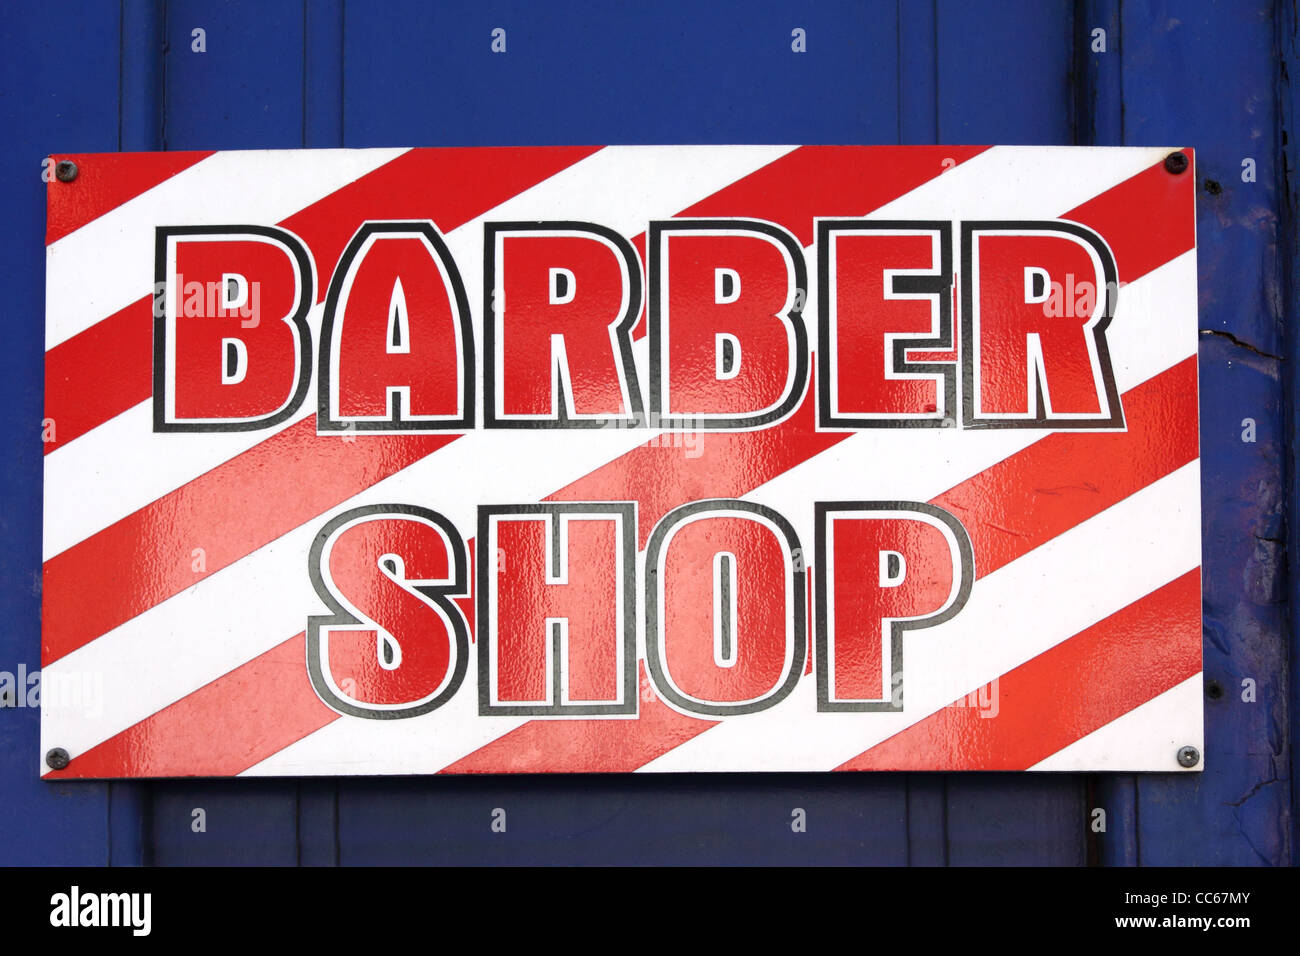 Barber shop sign Stock Photo